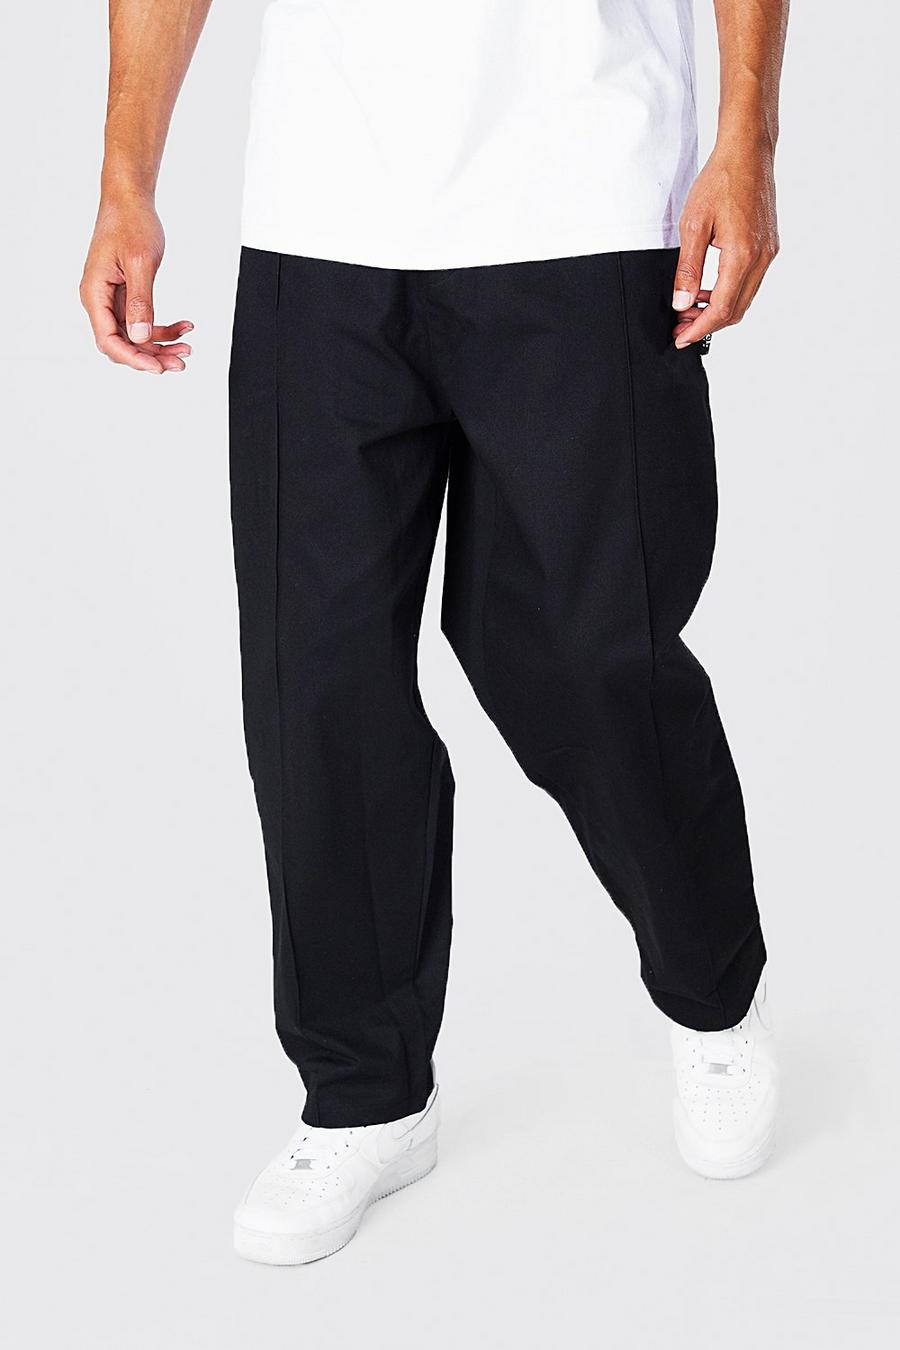 Tall - Pantalon chino court à taille élastique, Black schwarz image number 1